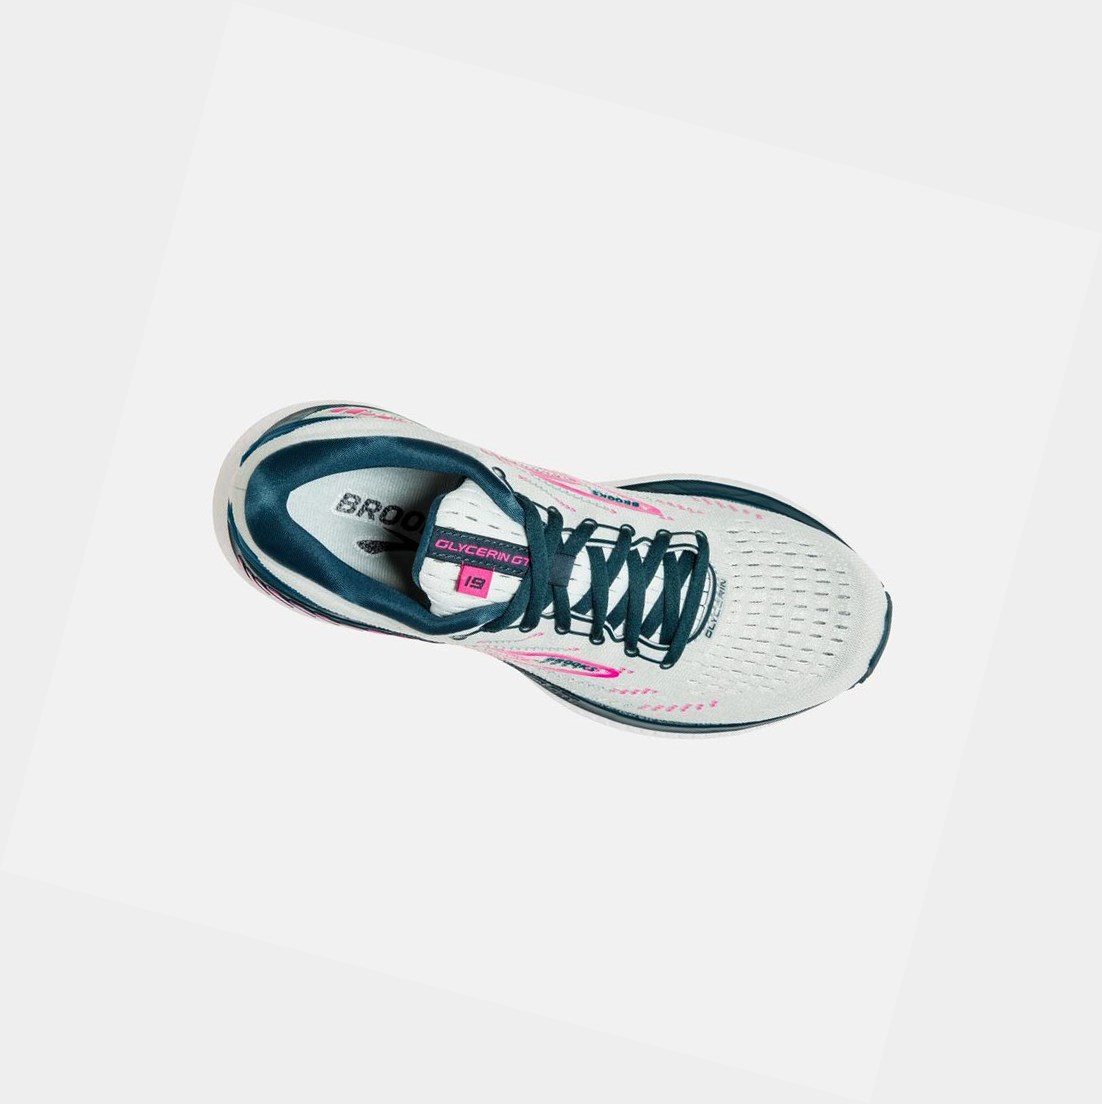 Brooks Glycerin GTS 19 Women's Road Running Shoes Ice Flow / Navy / Pink | GPQC-95084